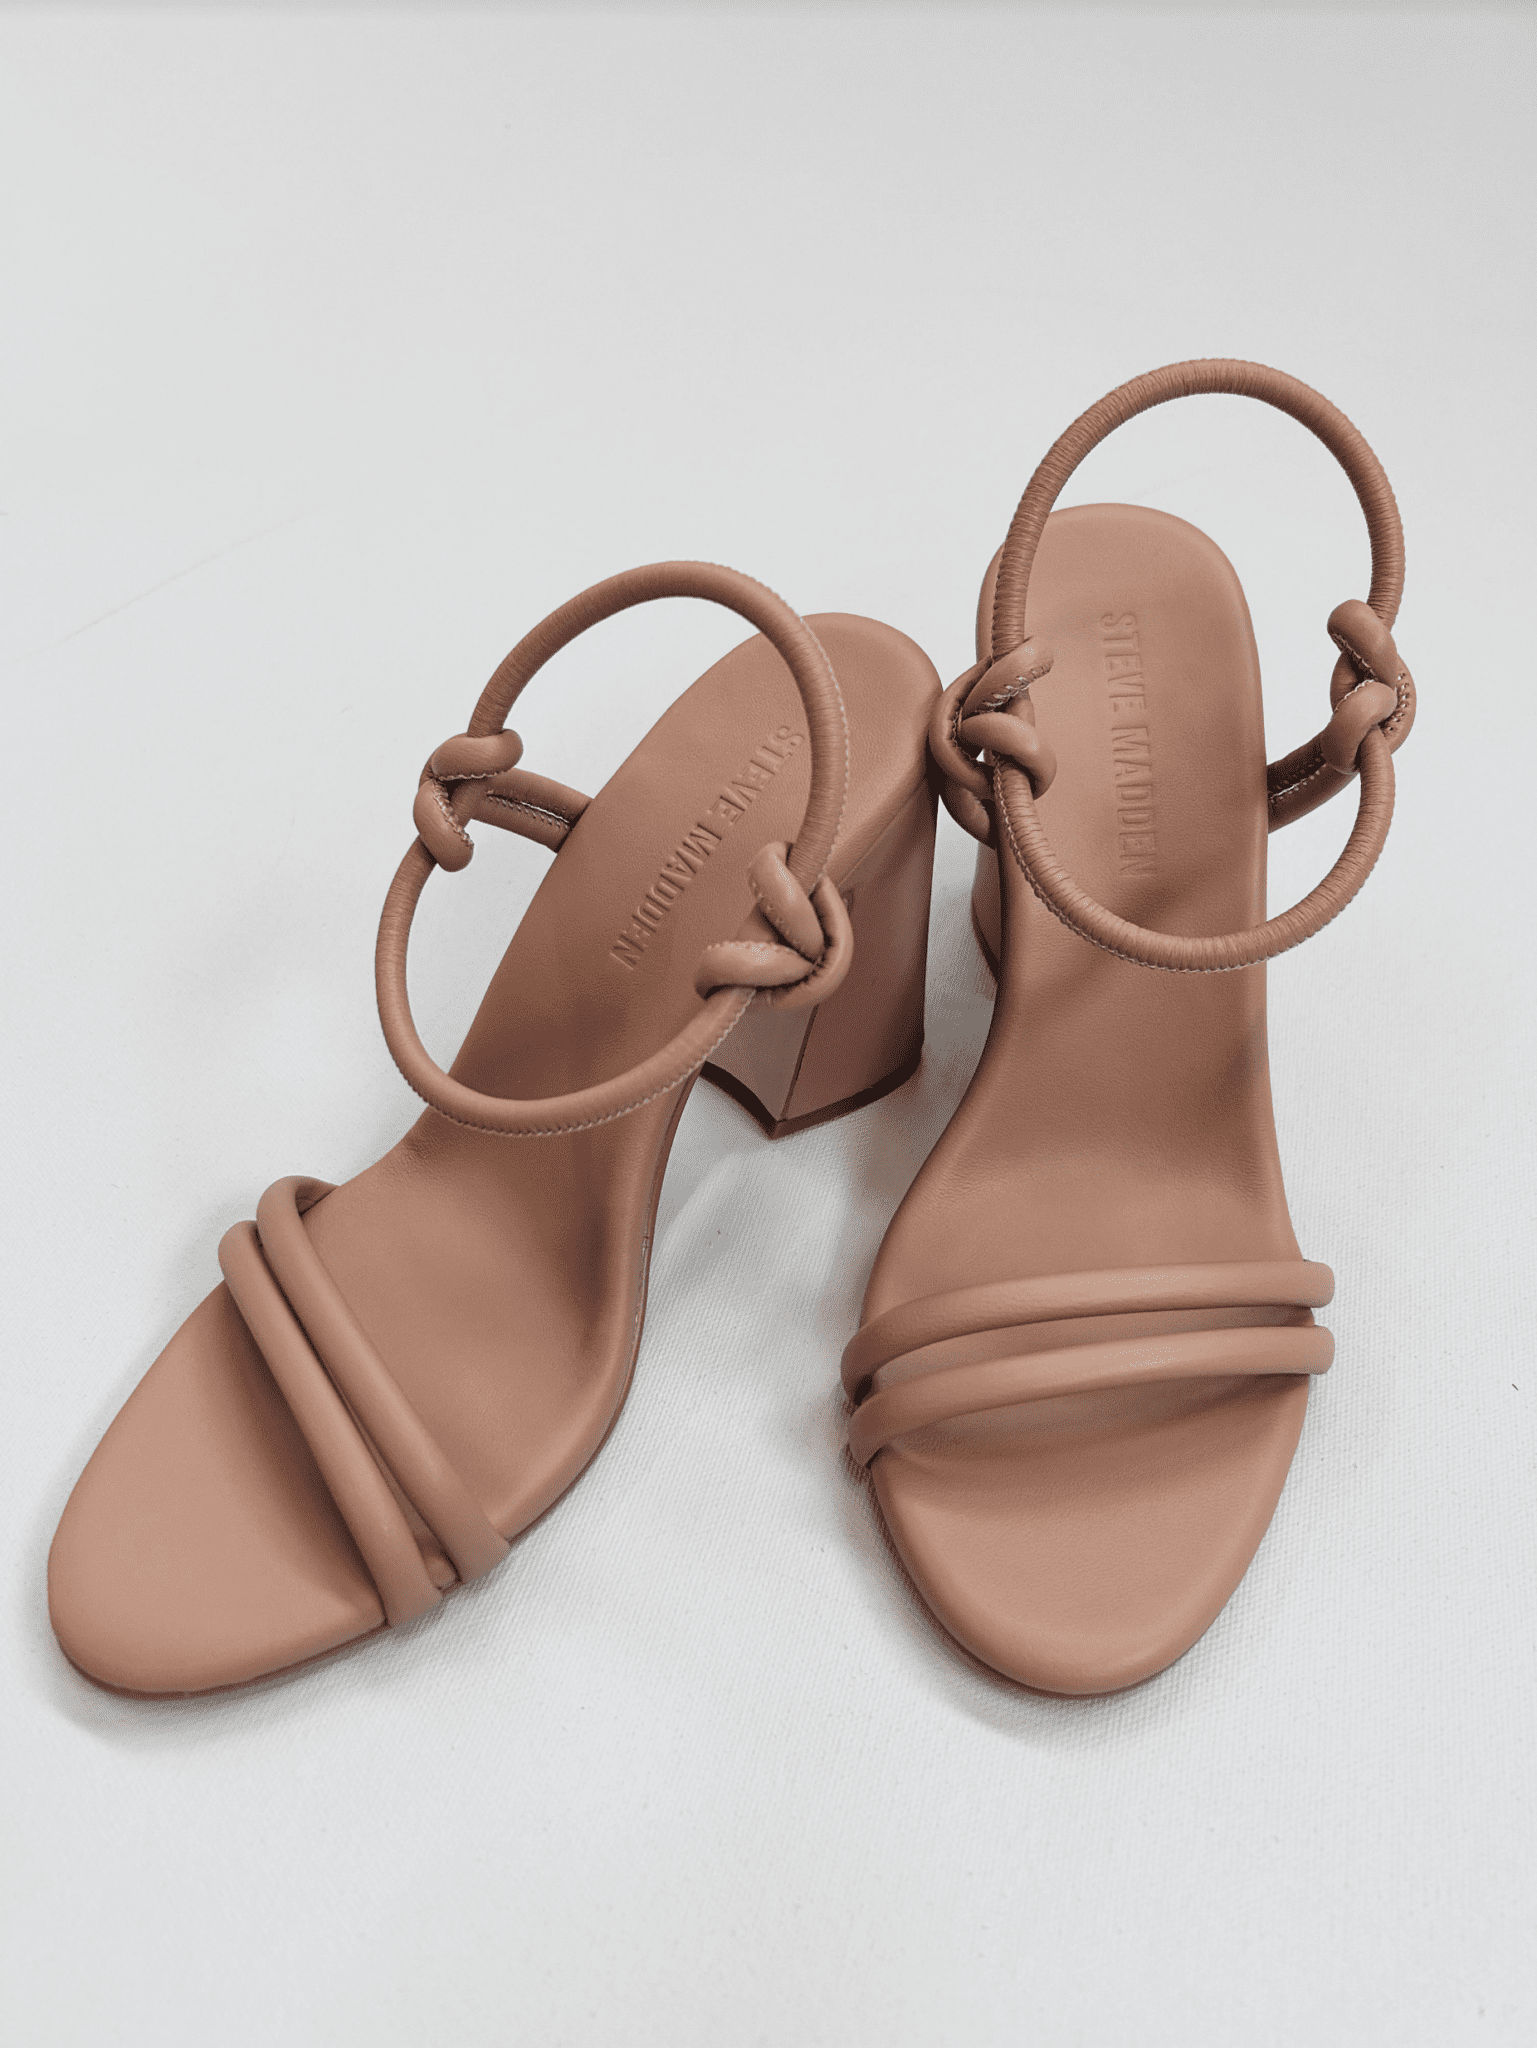 Steve Madden Frita Strappy Sandals size 8.5 | Fashion tips, Clothes design,  Slip on sandal